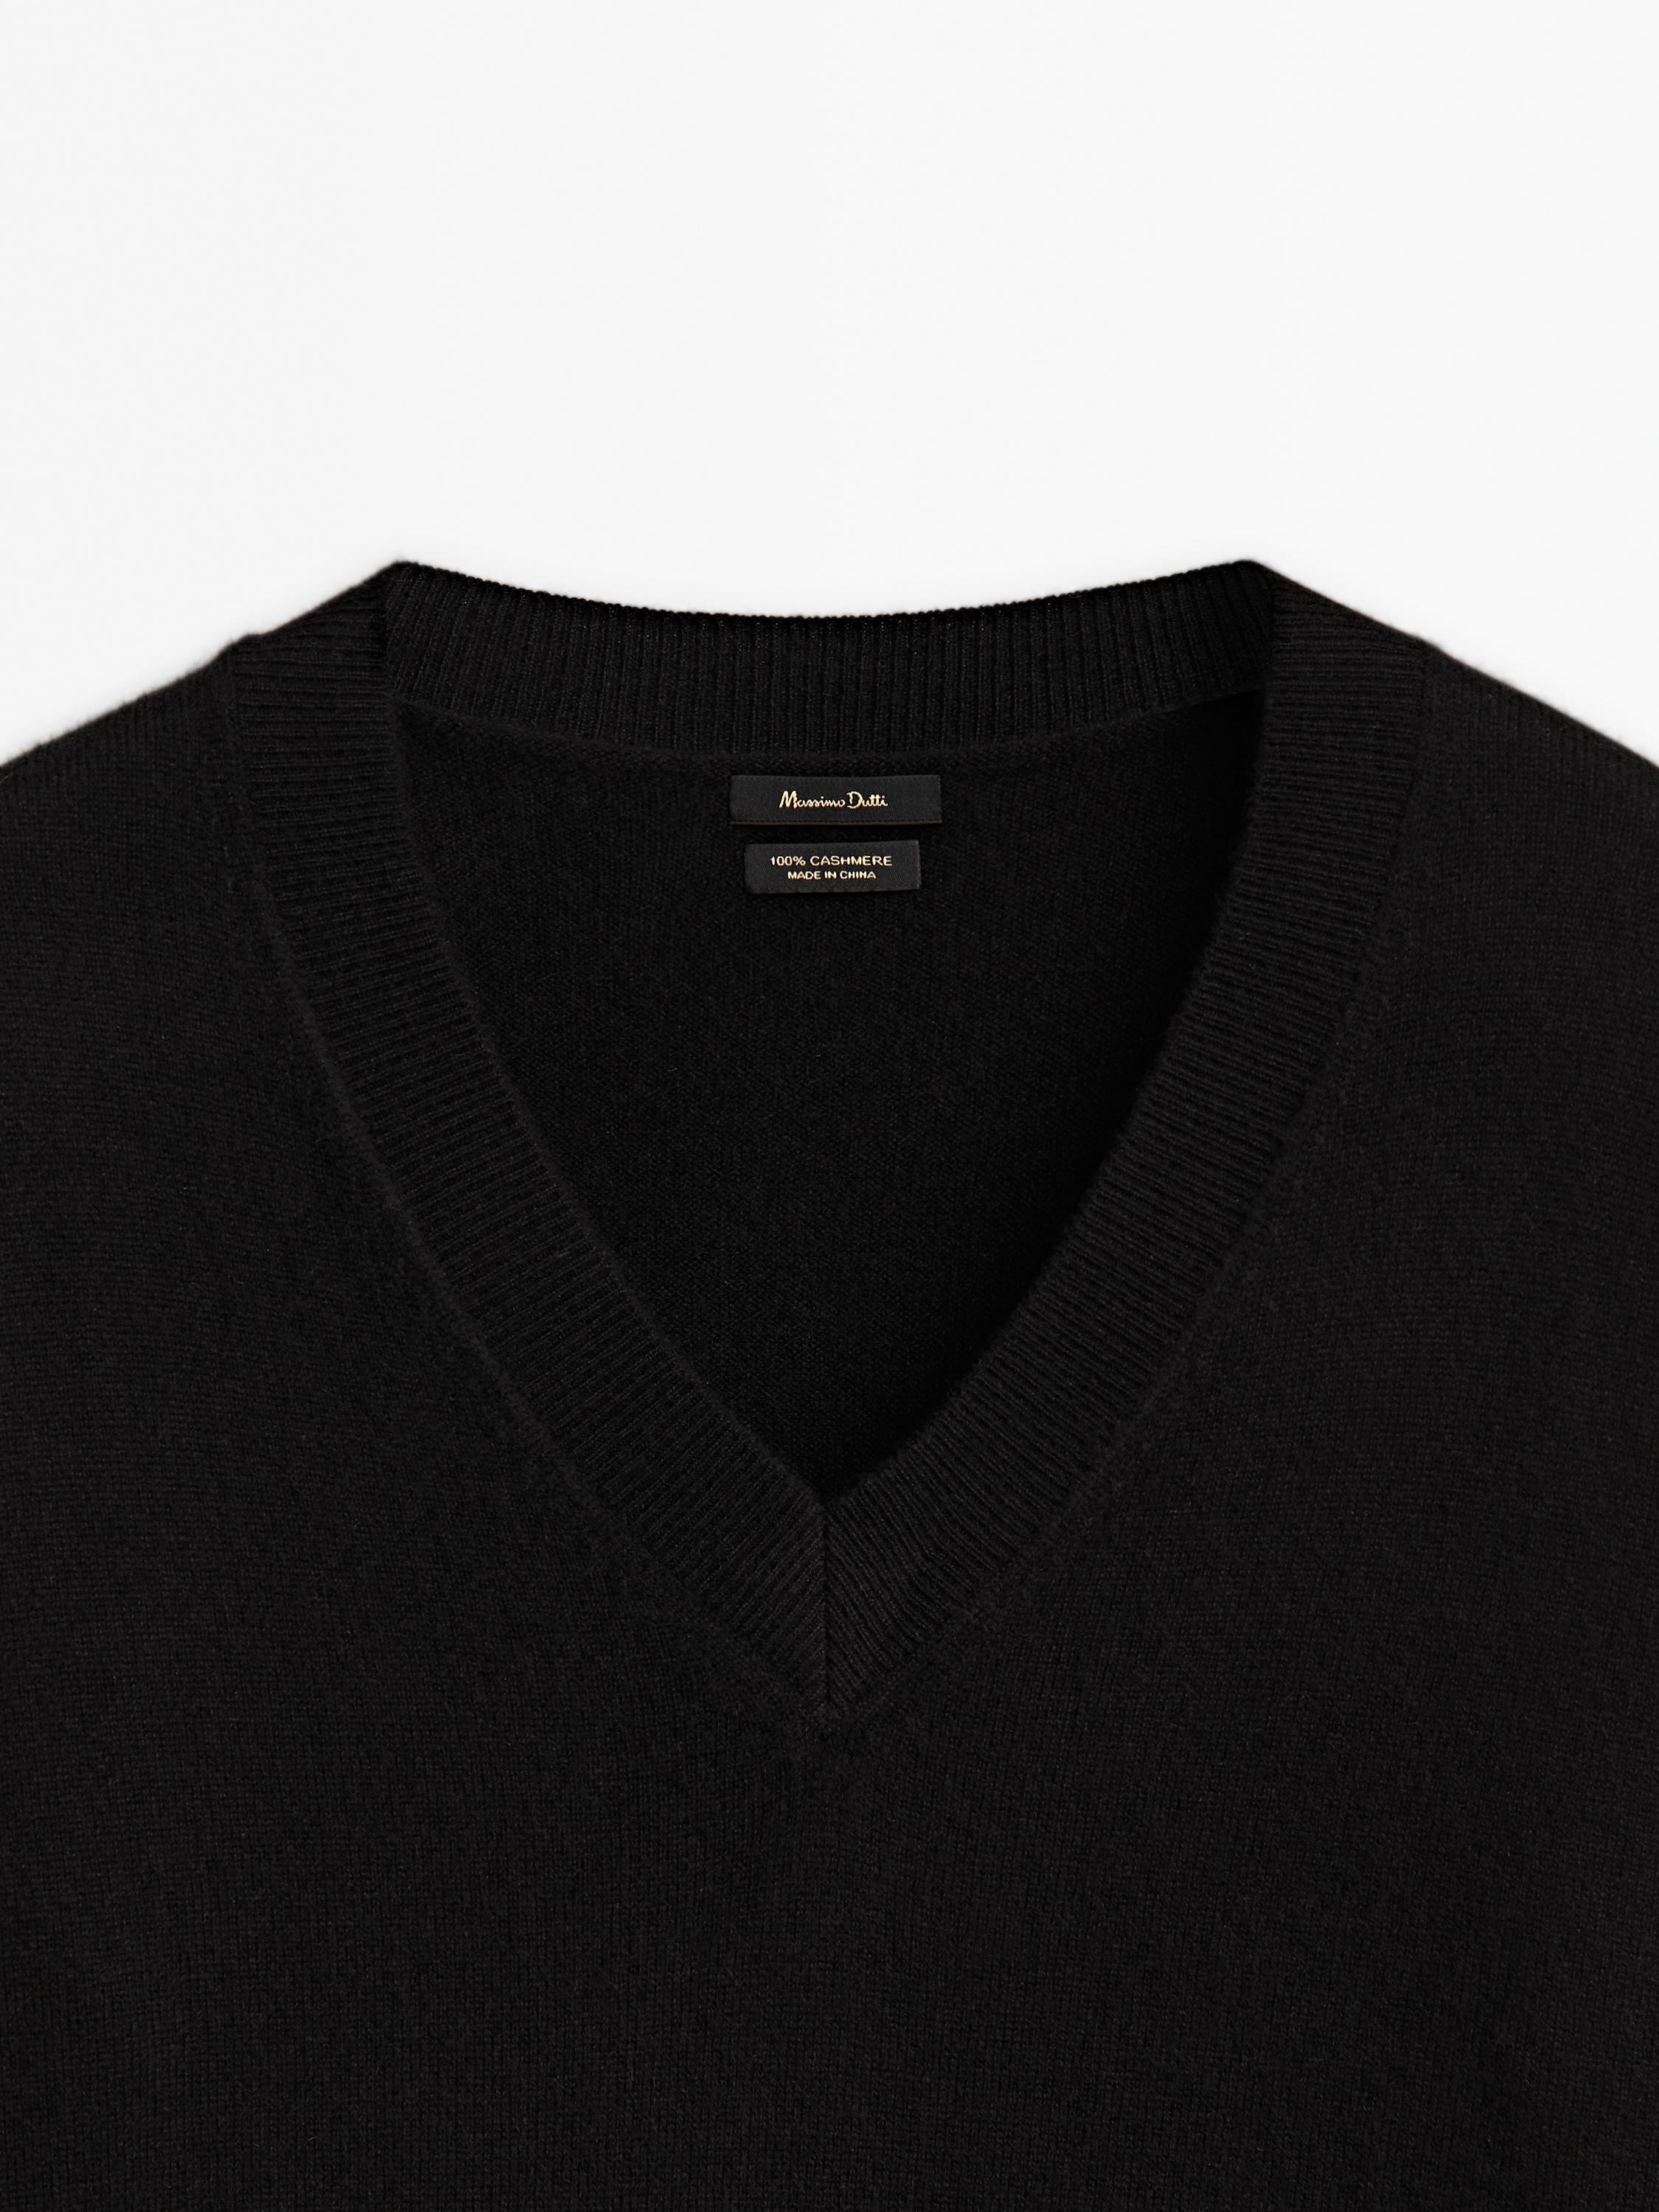 100% cashmere V-neck sweater